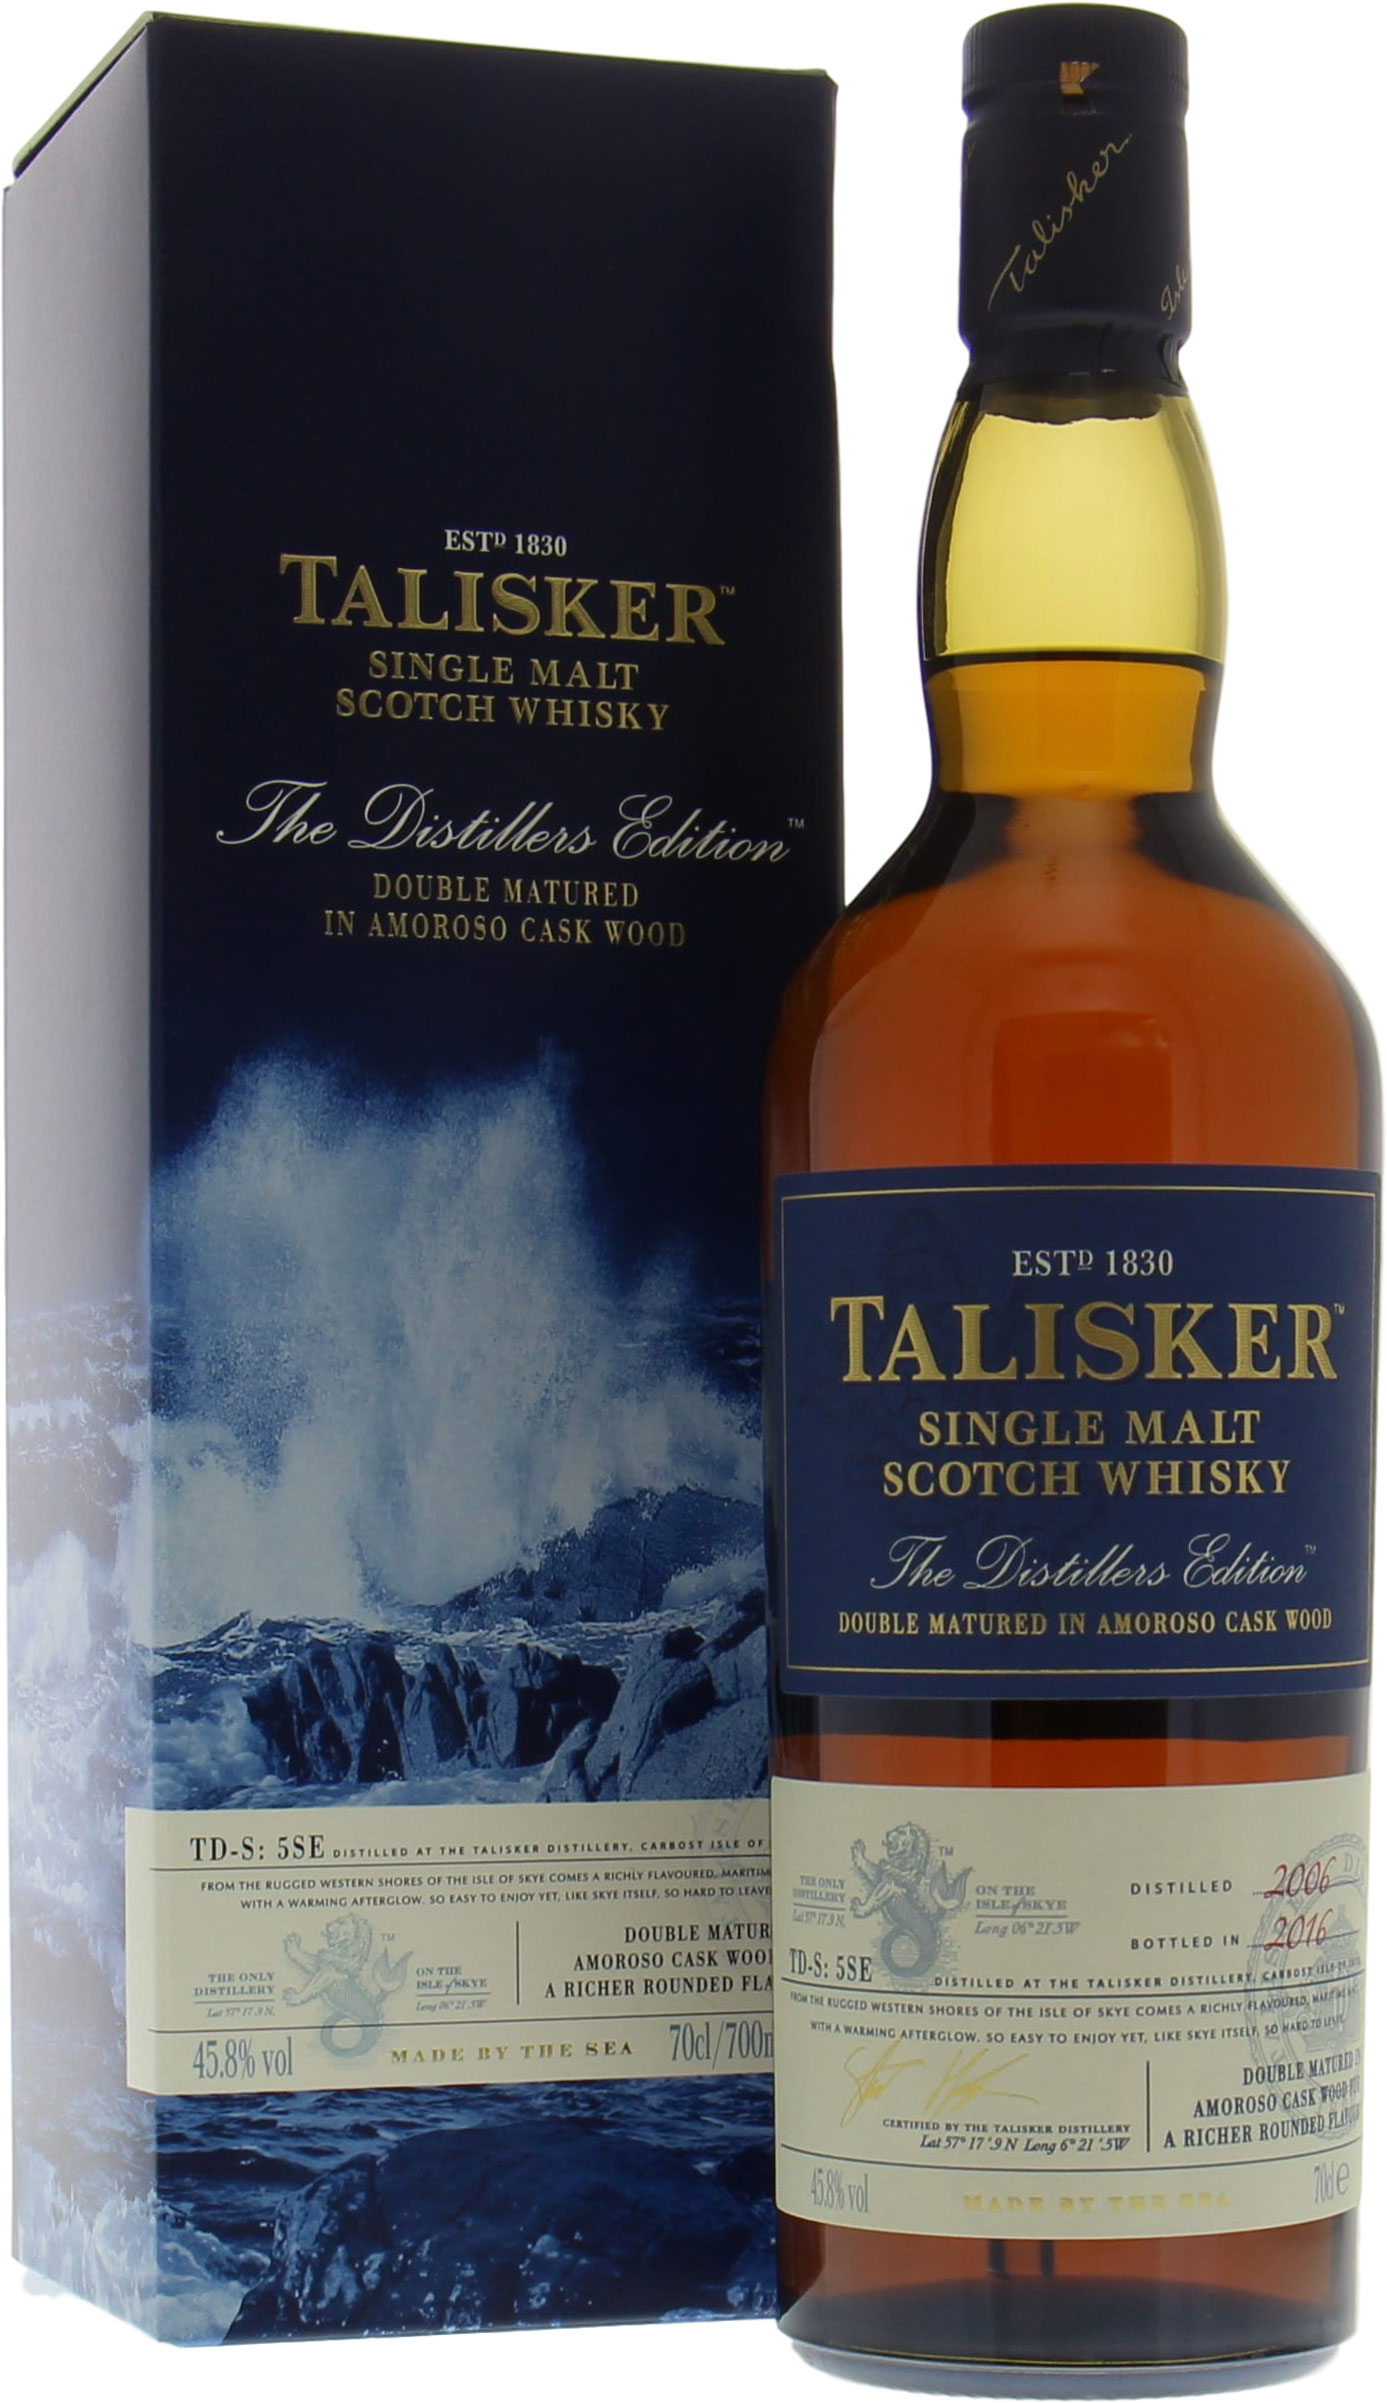 Talisker - Distillers Edition 2016 45.8% nv In Original Container